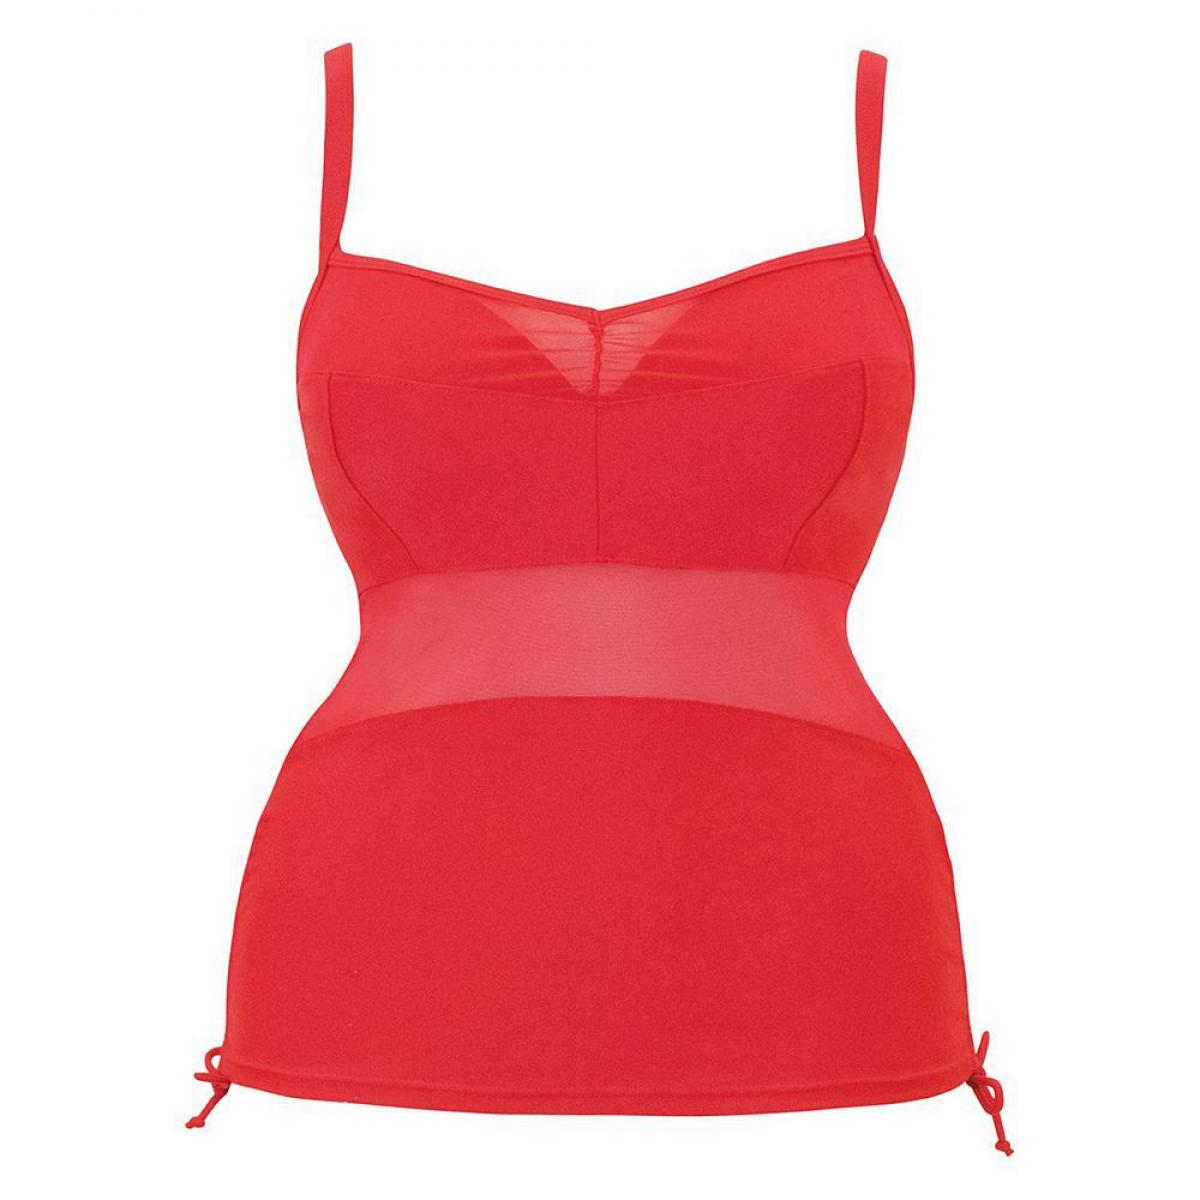 Curvy Kate Sheer classe bustier haut bikini CS001307 armatures bandeau rouge